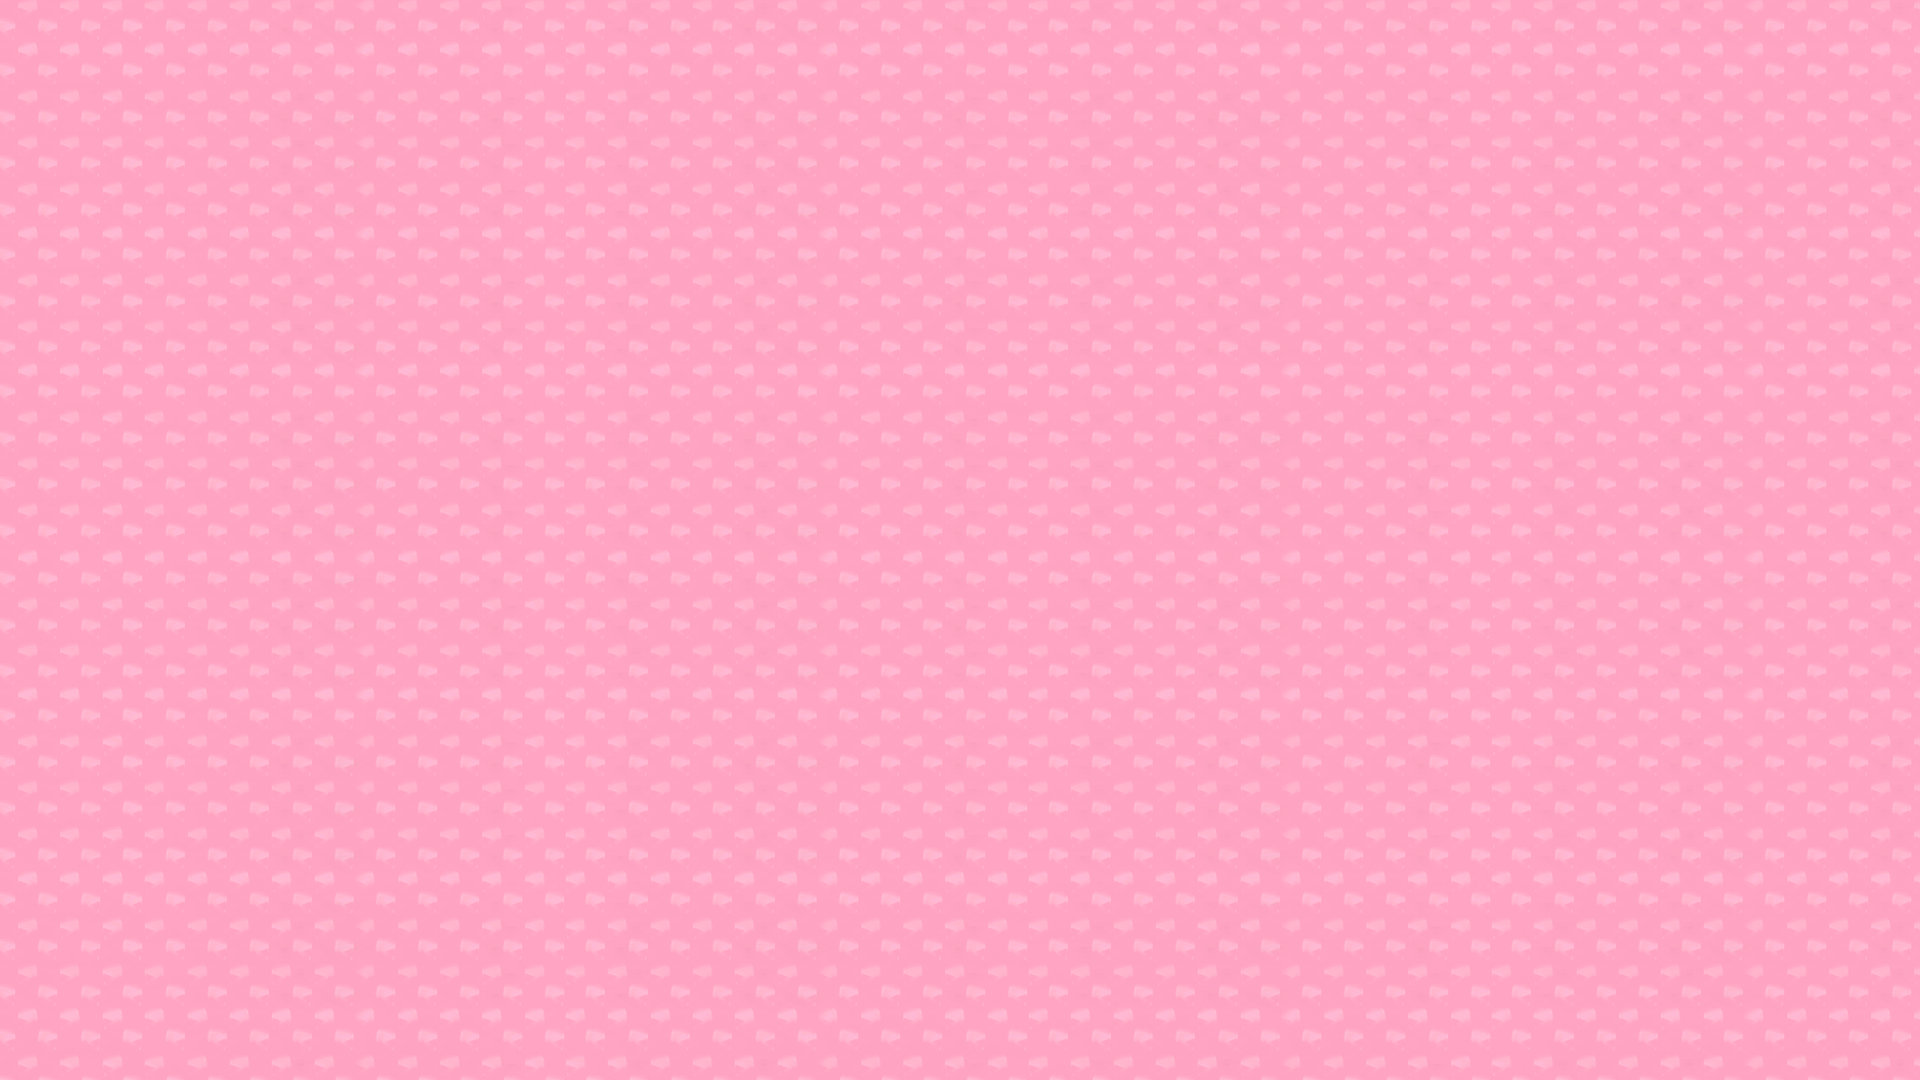 General 1920x1080 tiles minimalism pink texture